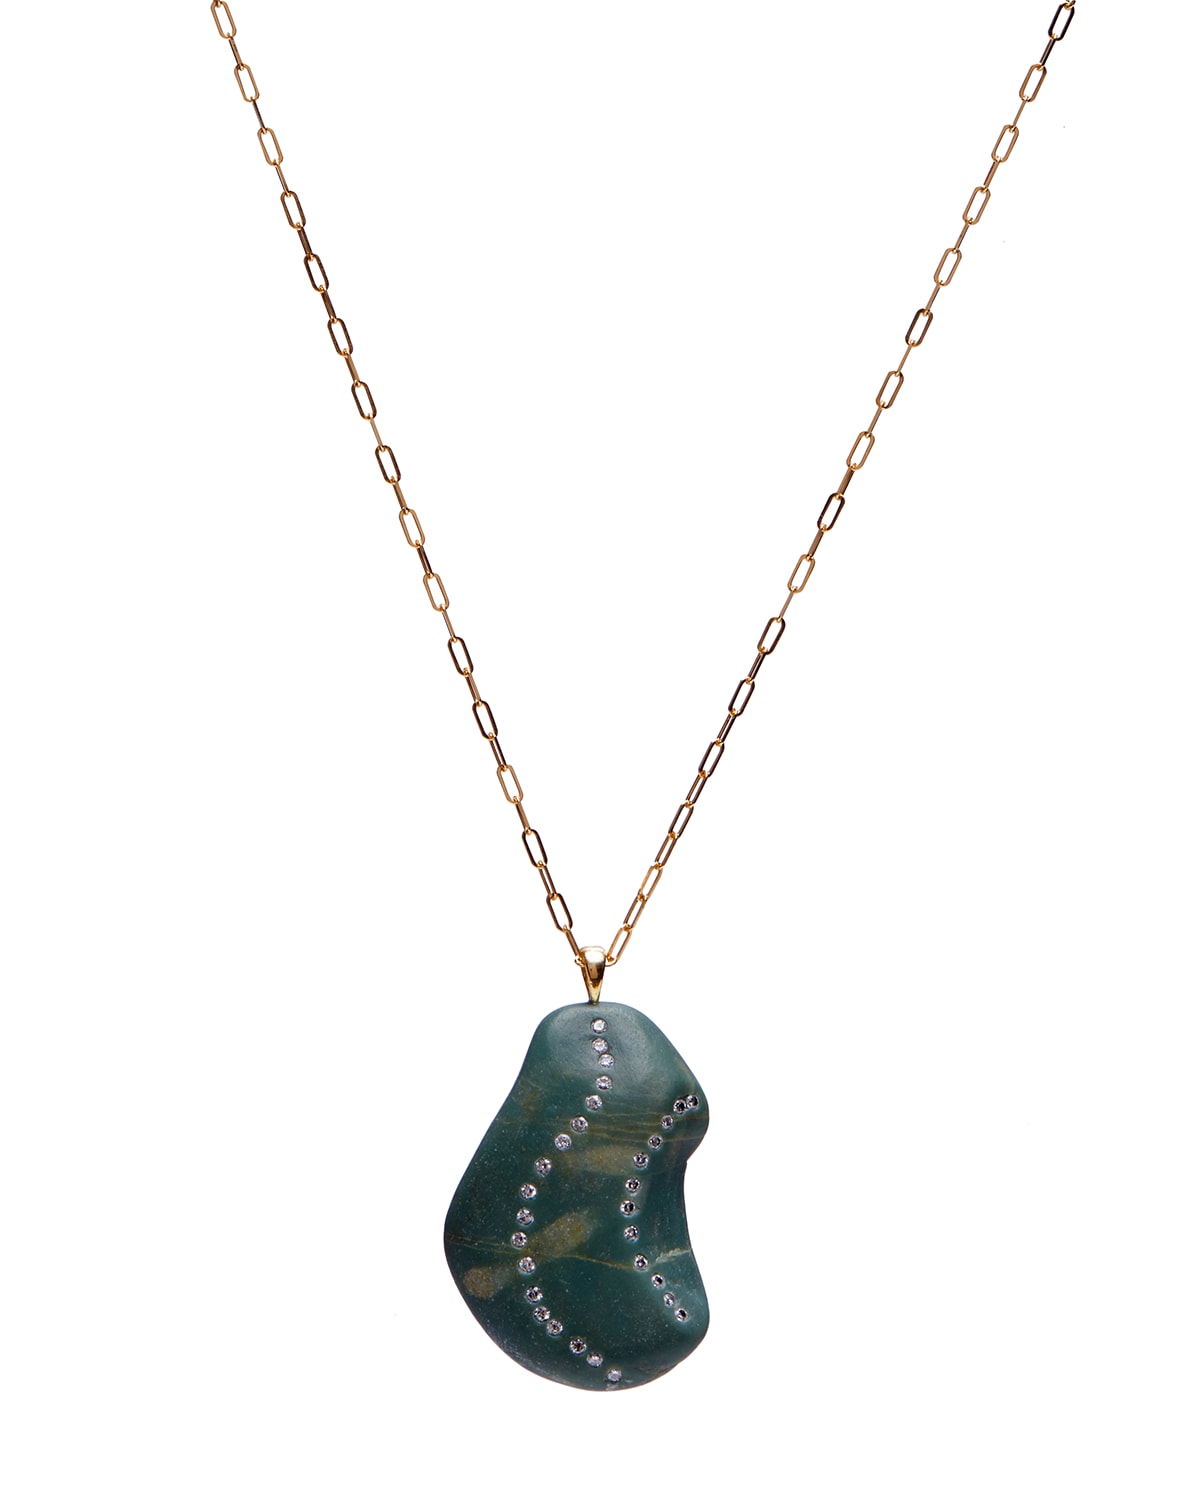 CVC Stones 18k Gold Irregular Flex Necklace - One of a Kind, 30"